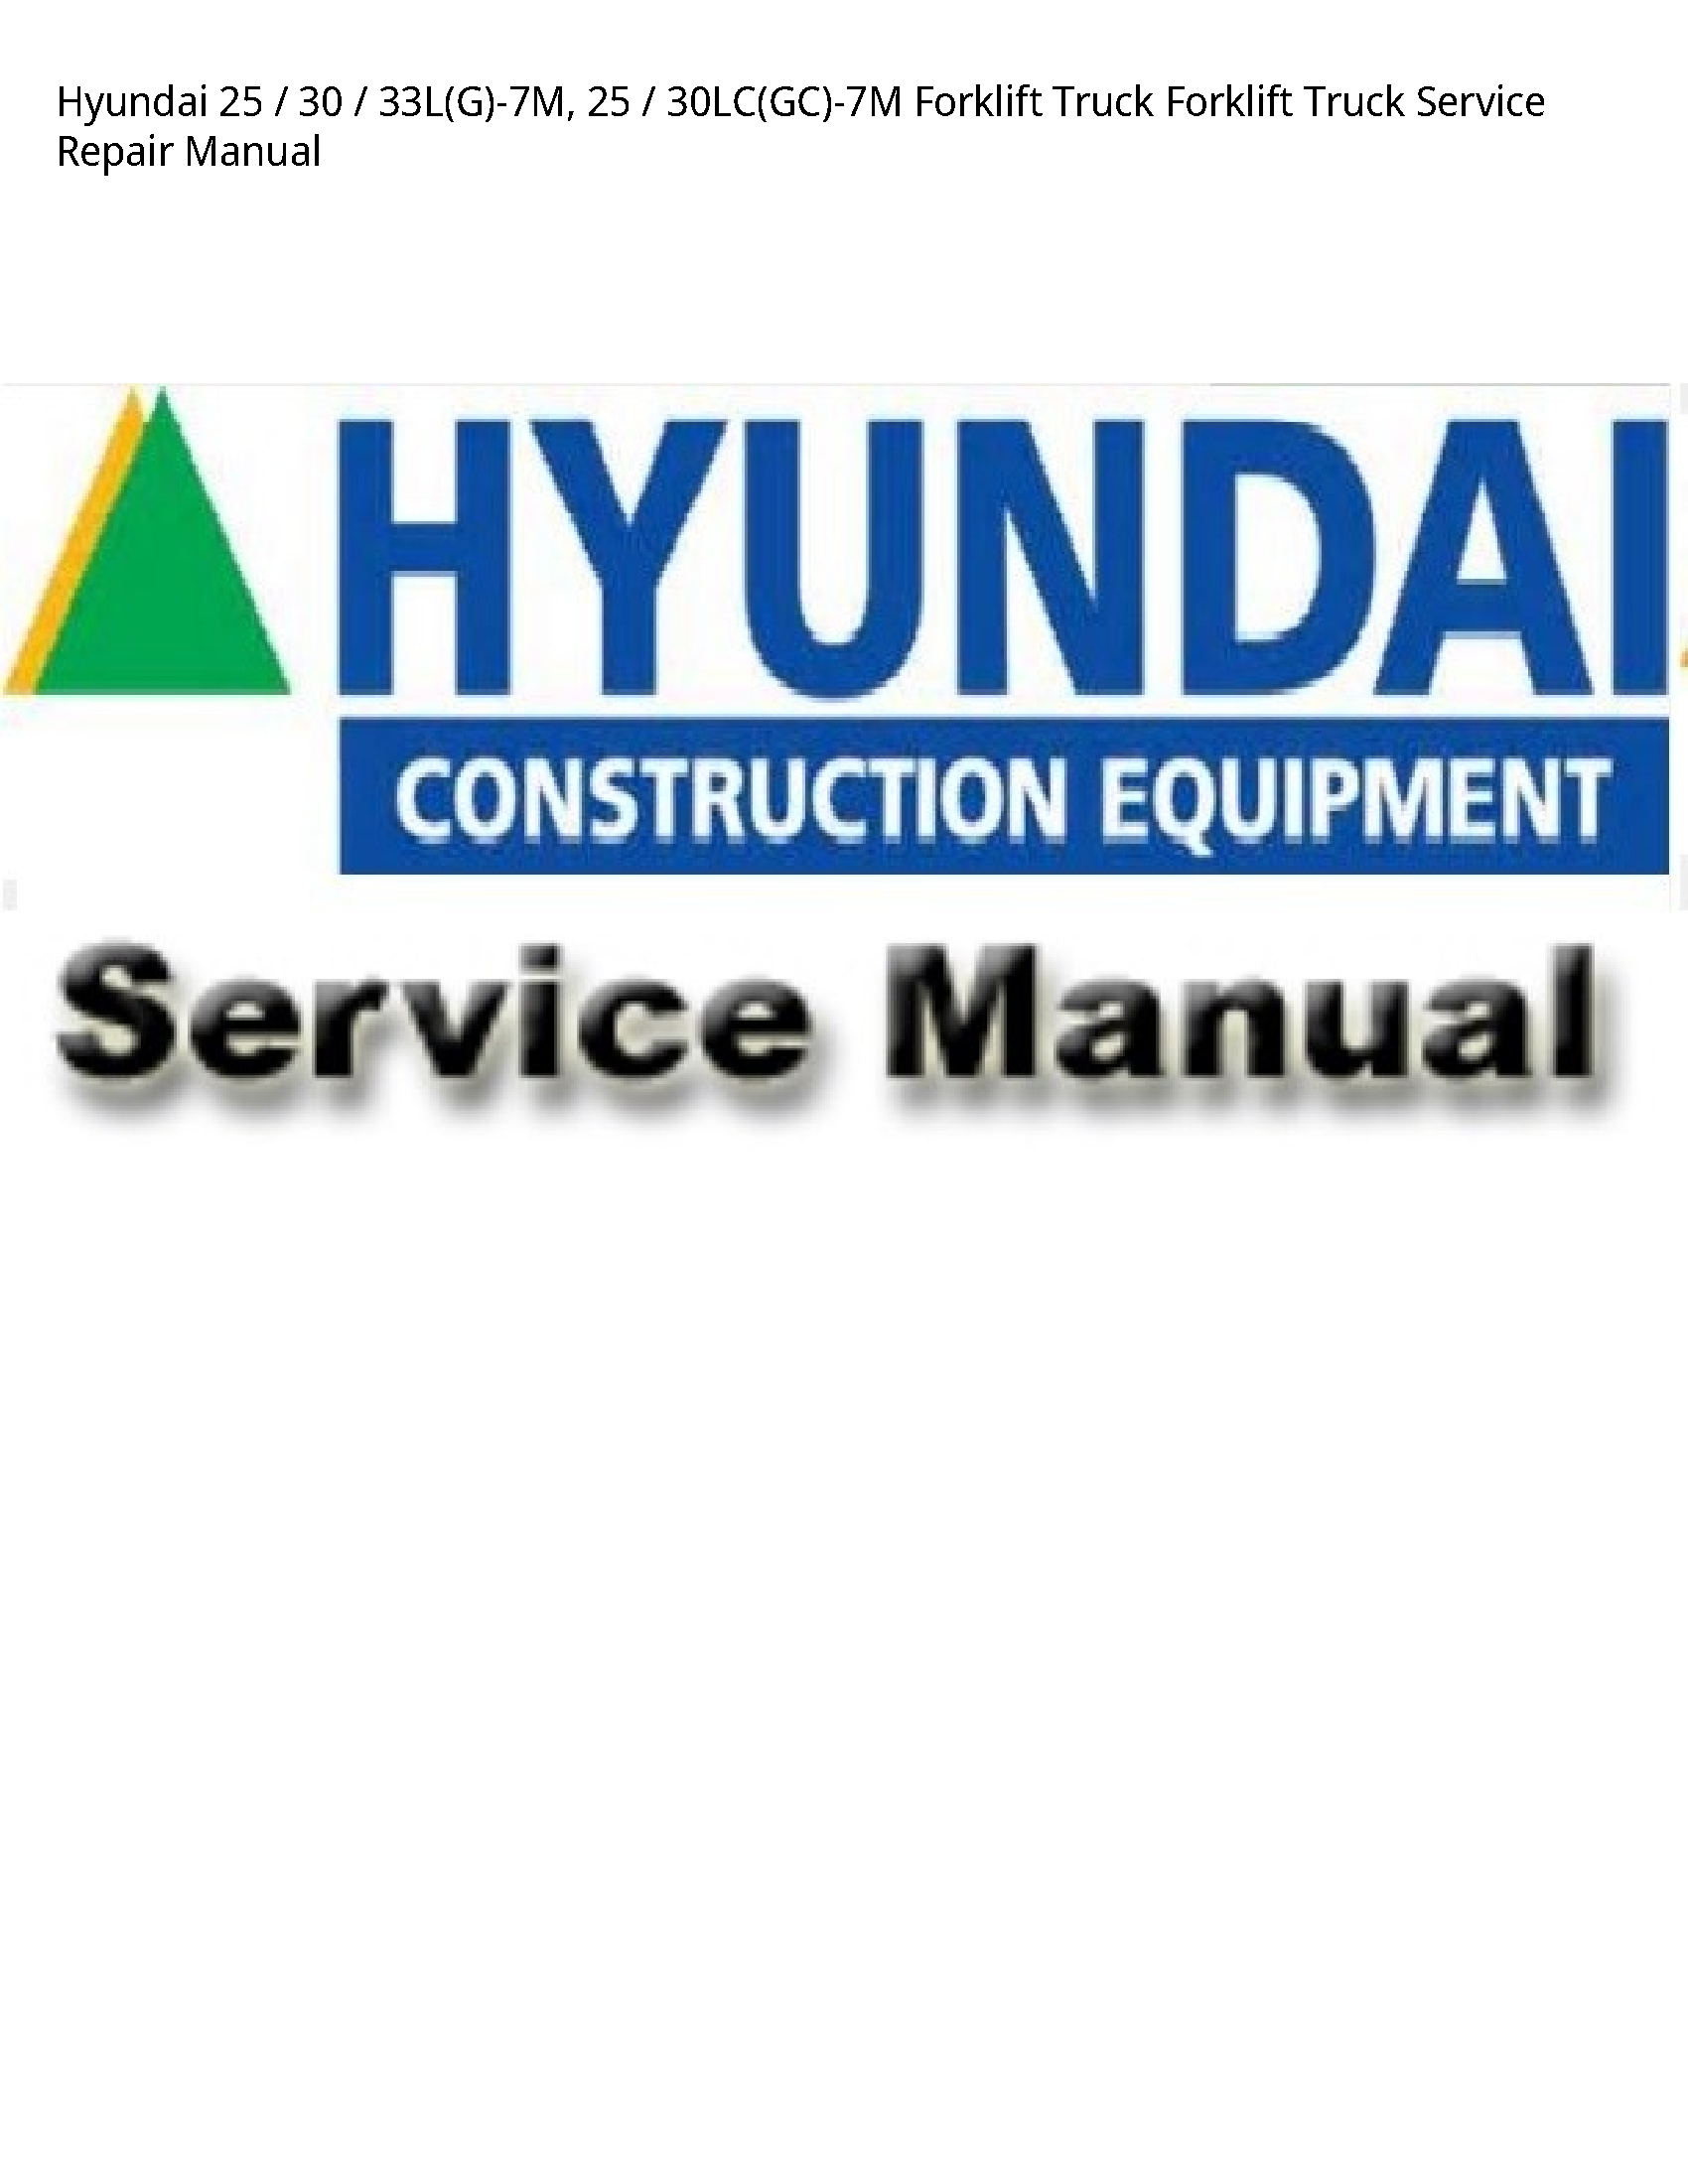 Hyundai 25 Forklift Truck Forklift Truck manual